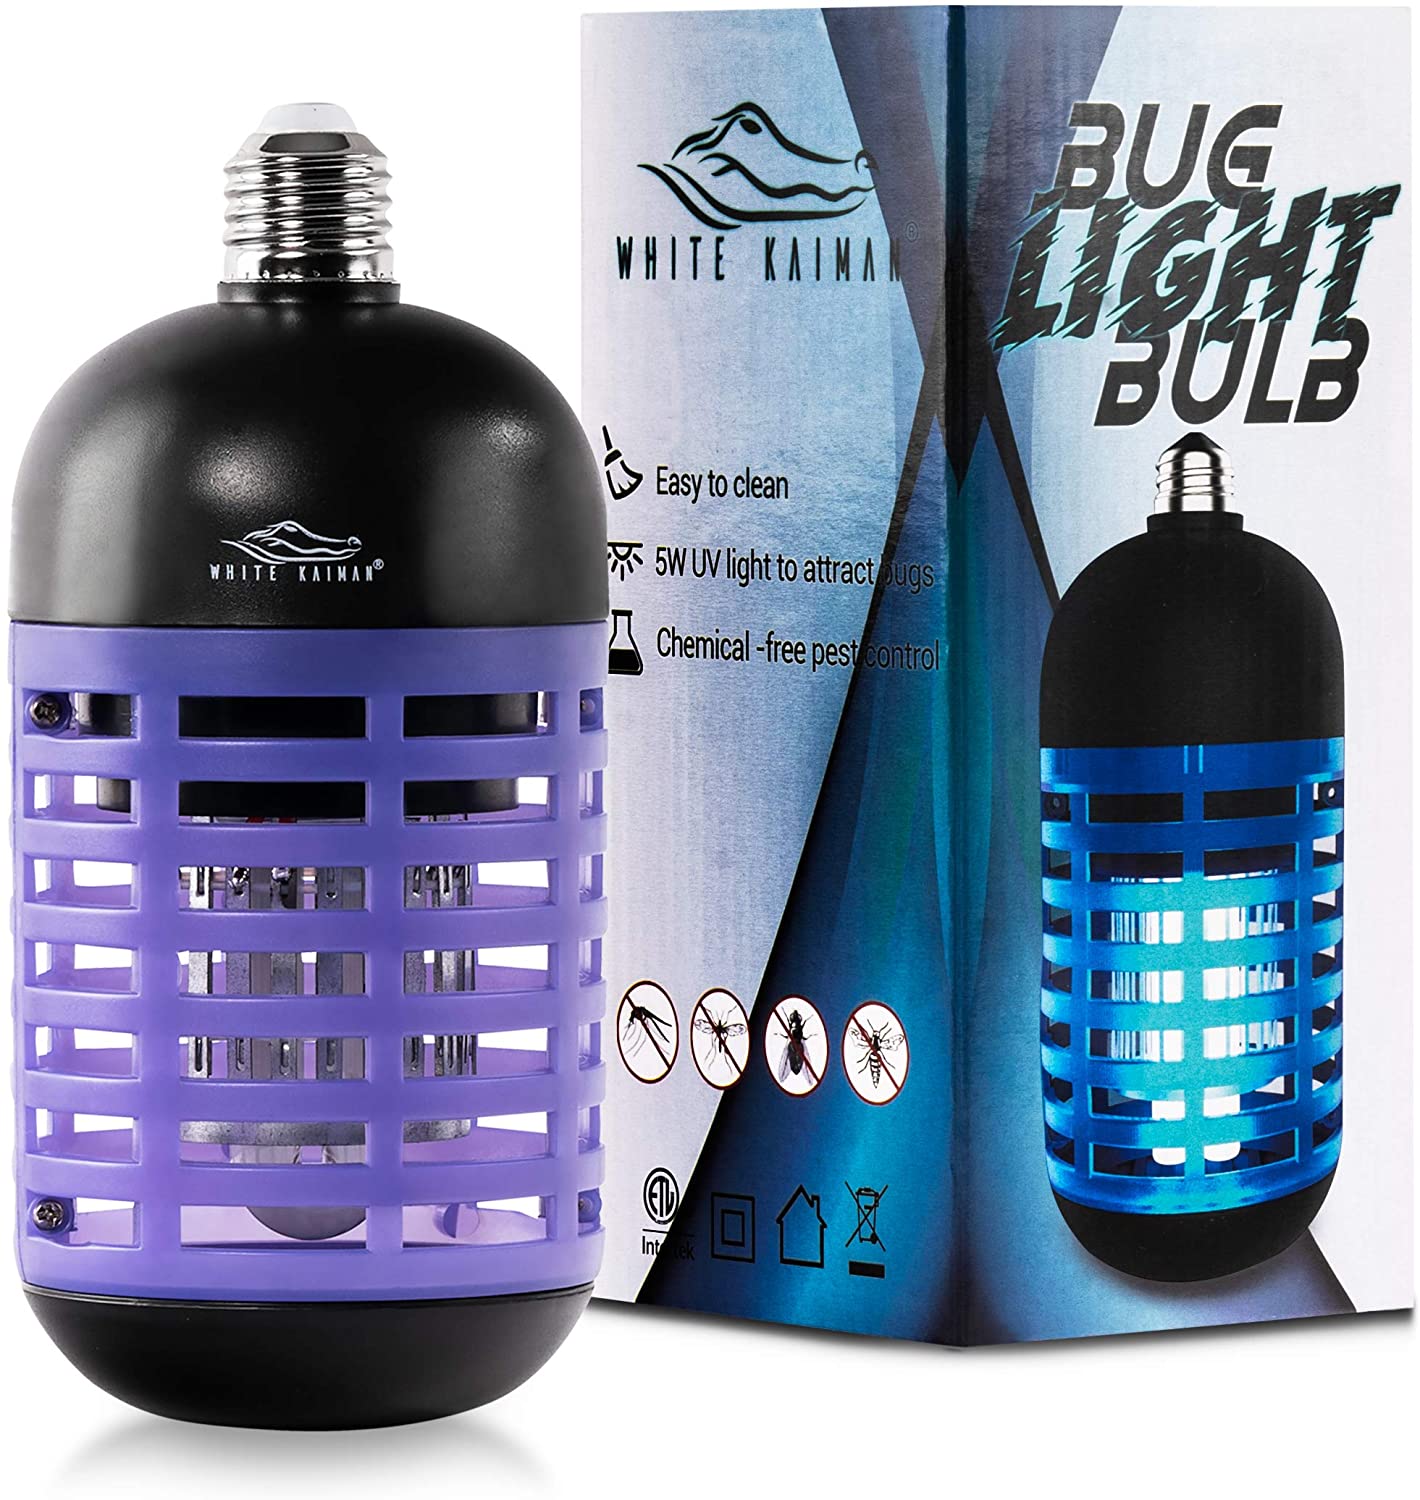 LIGHTSMAX Bug Zapper, Mosquito Zapper Indoor Plug in Night Light-2 Packs, Kills Mosquitos & Flies, Safer for Pets, Dusk to Dawn Sensor